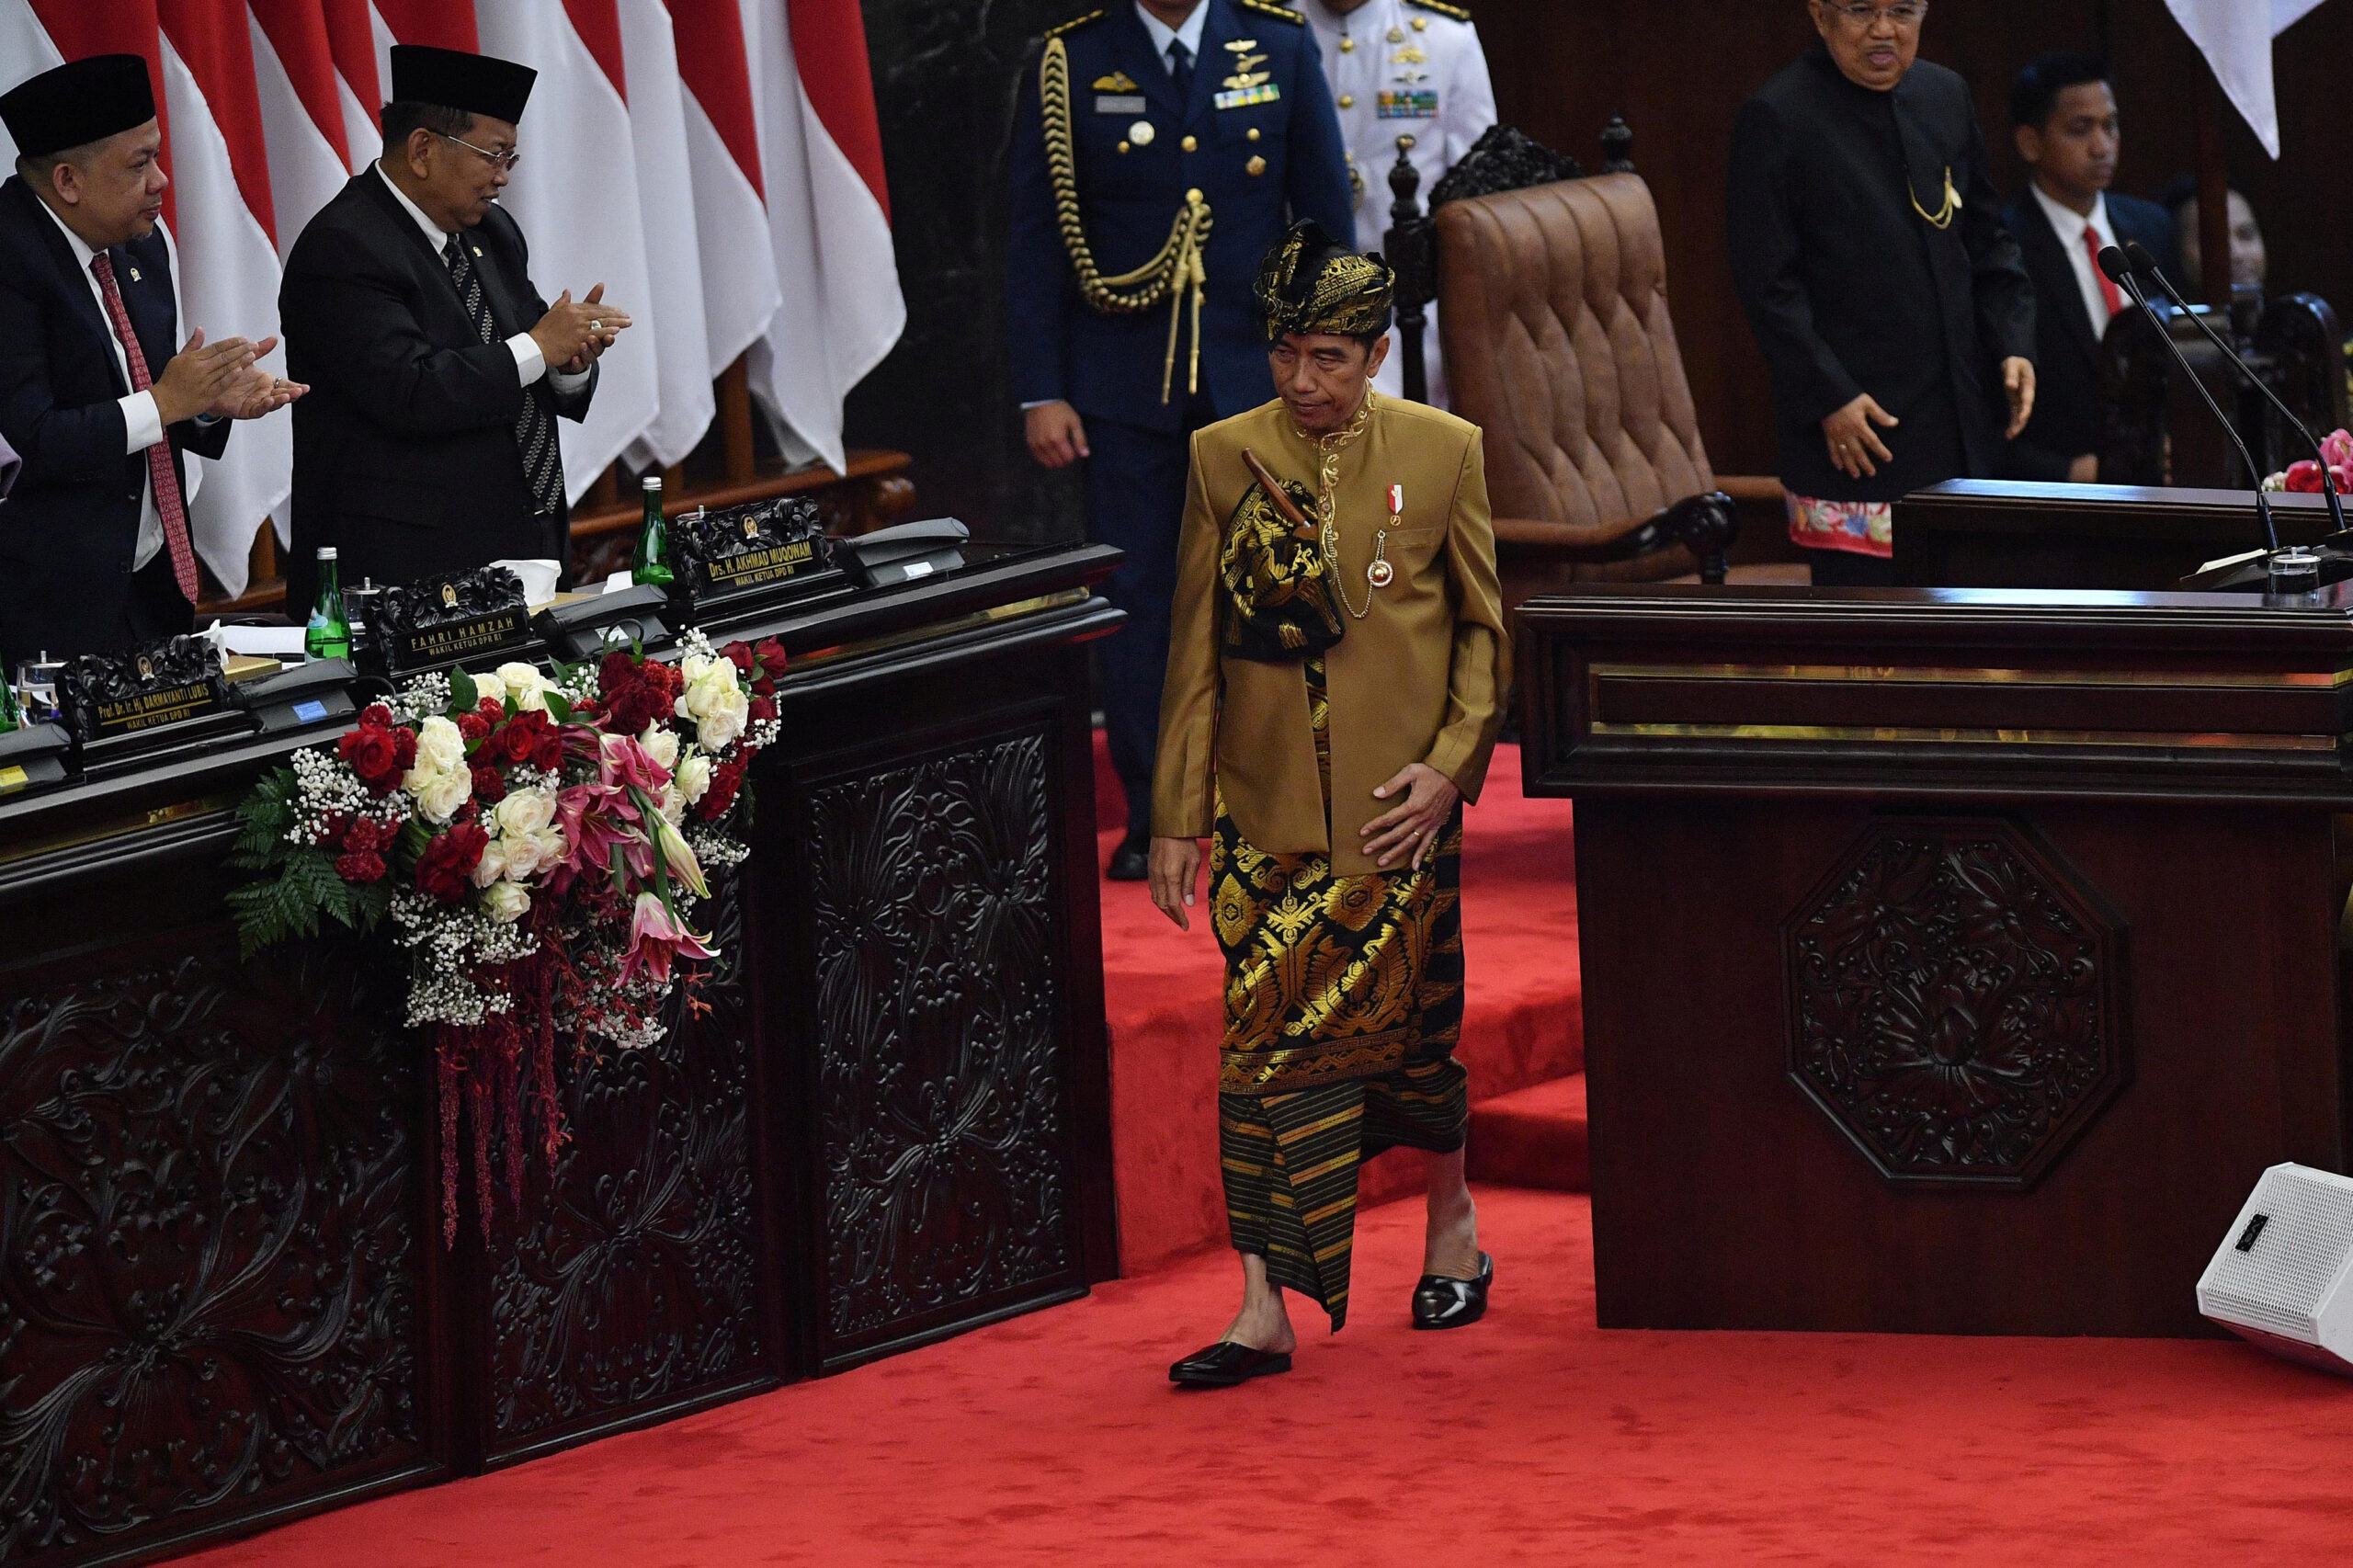 18th East Asia Summit begins in Jakarta